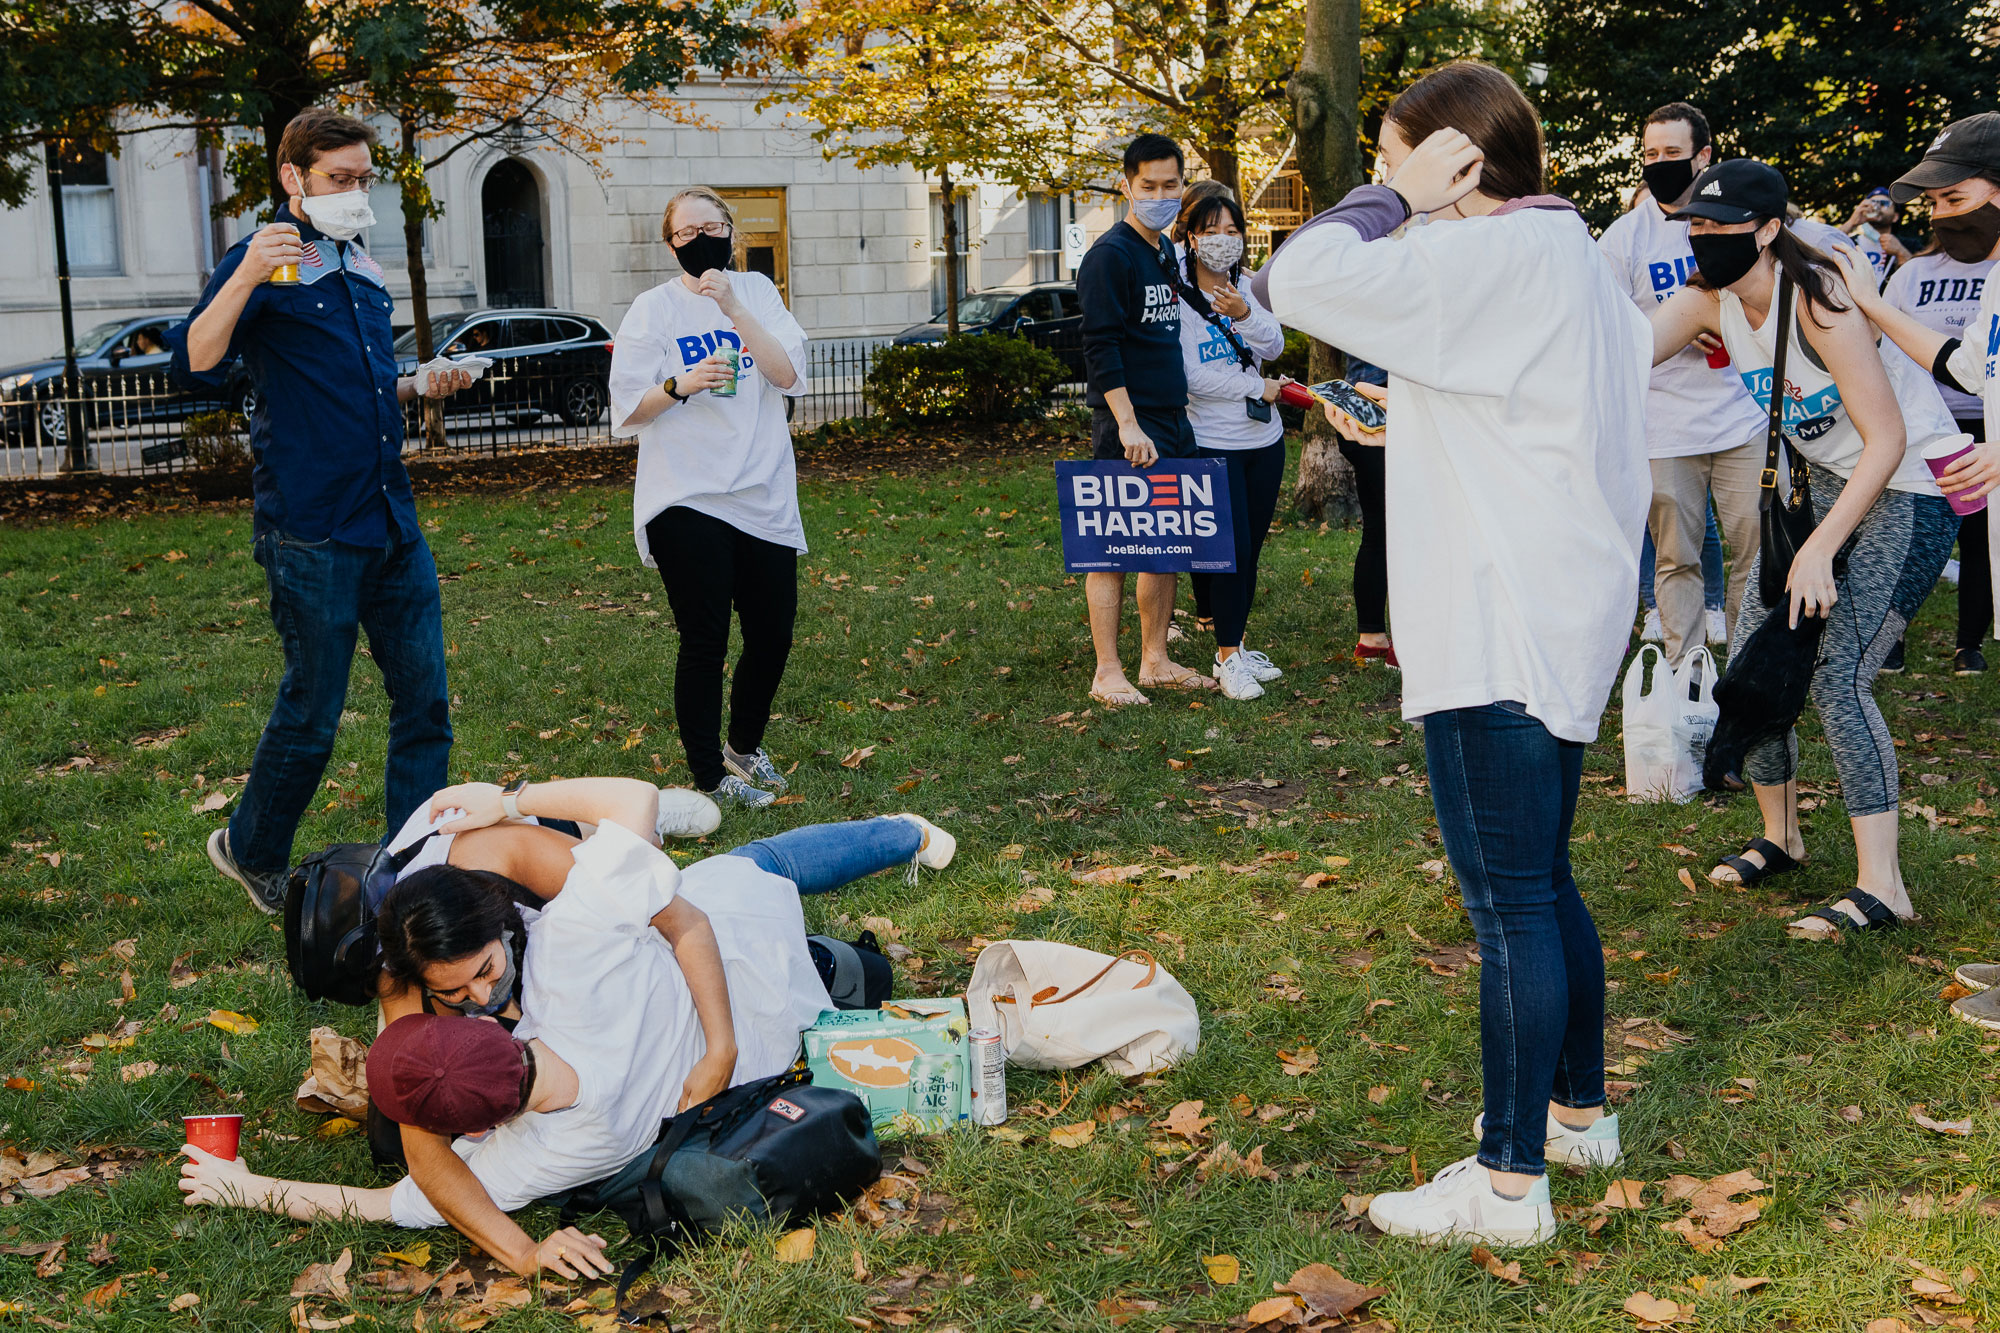 Members of President-elect Joe Biden's staff celebrate his victory in Rittenhouse Square Park in Philadelphia on Nov. 7. (Michelle Gustafson for TIME)